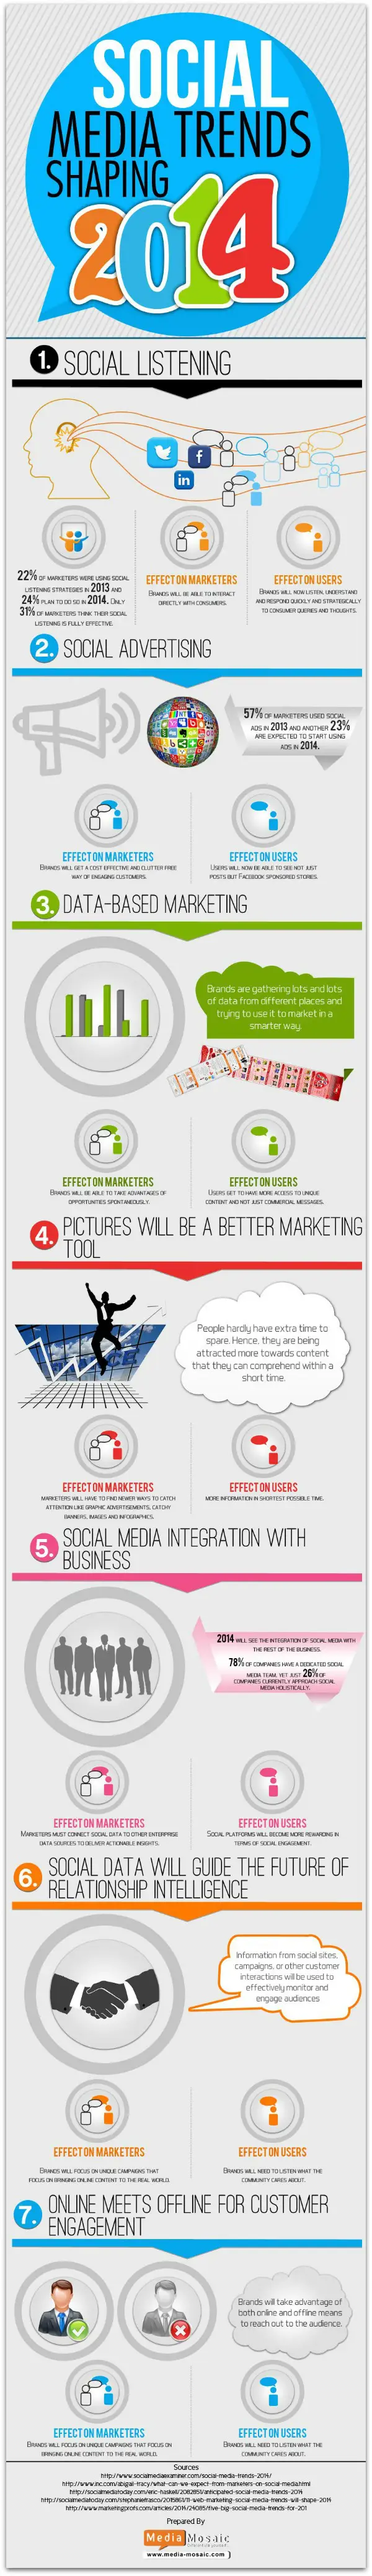 Social_Media_Trends_for_2014_Infographic digital marketing